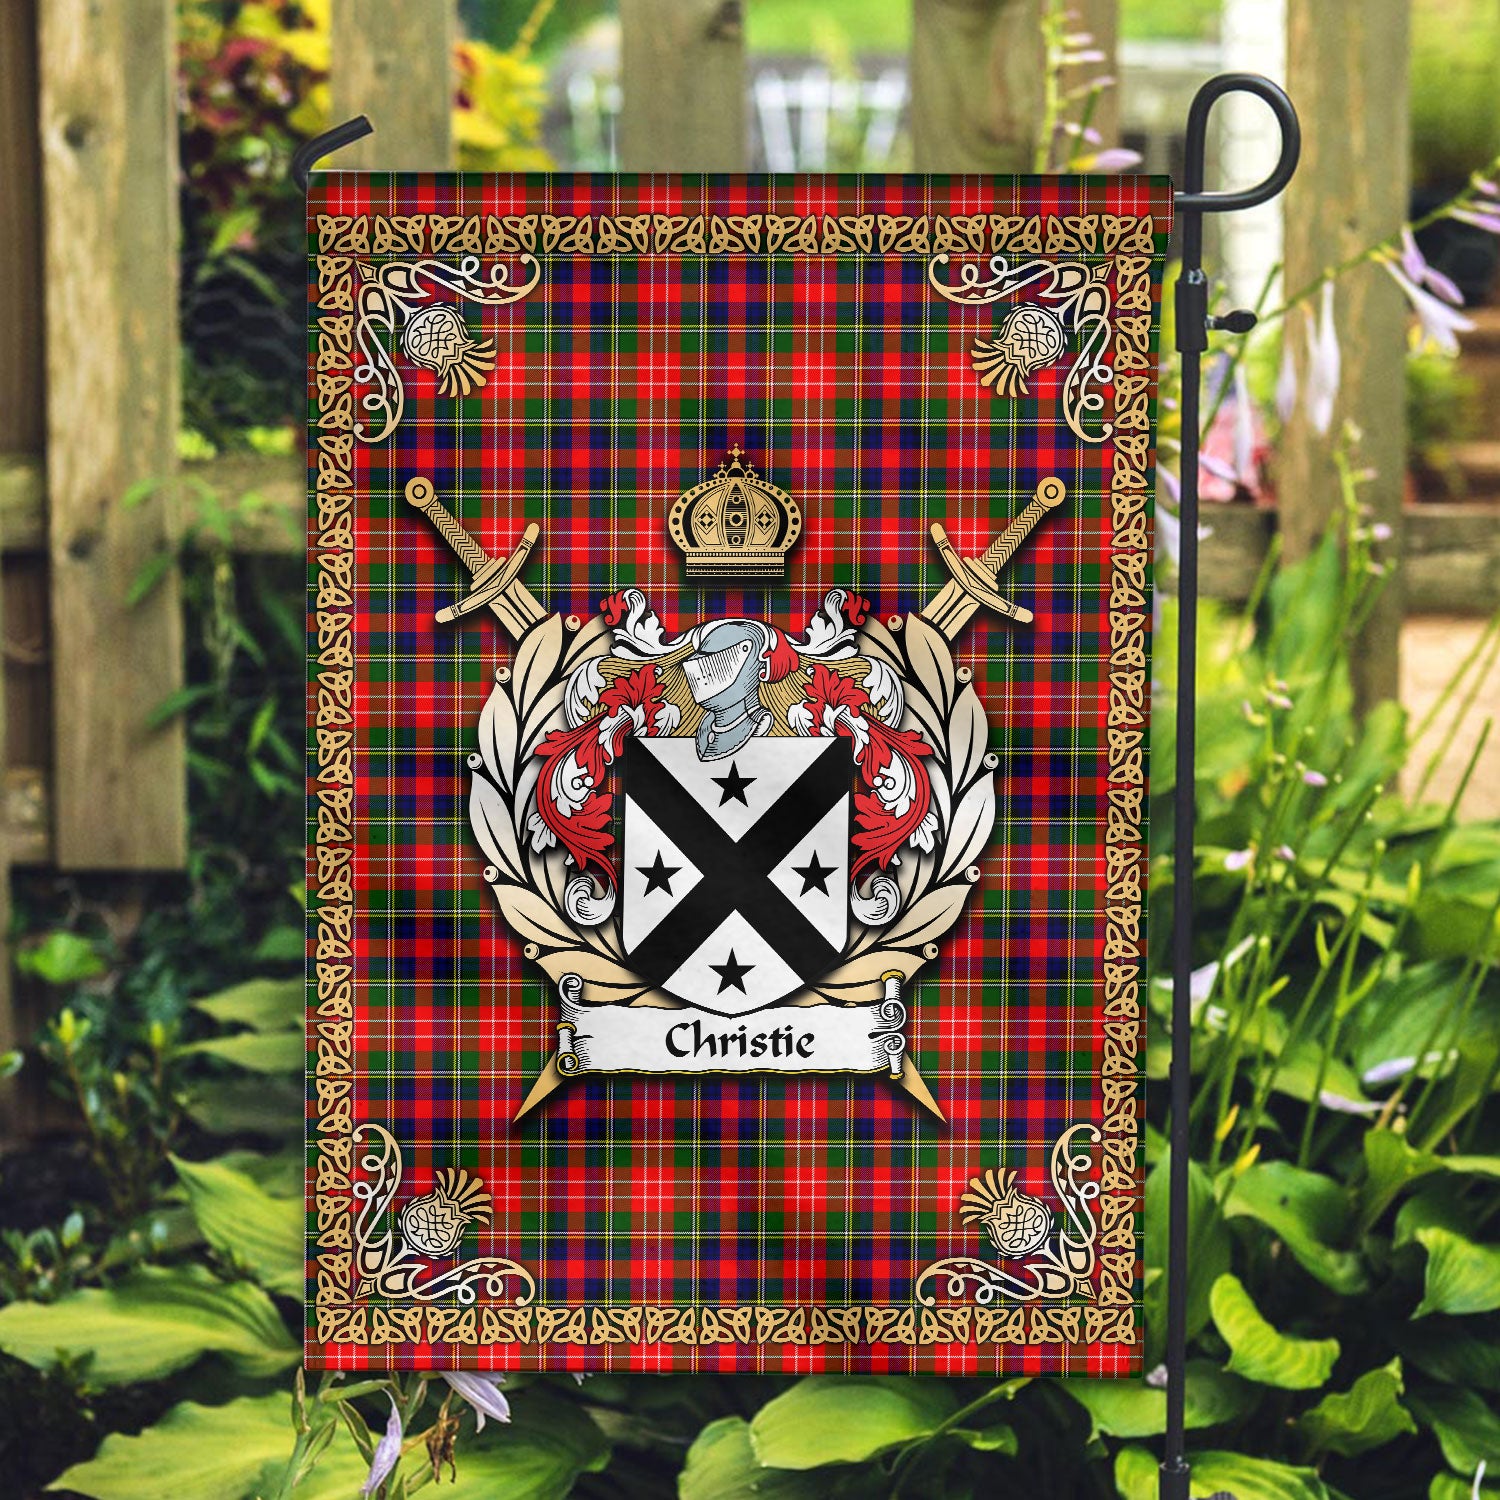 Christie Tartan Crest Garden Flag - Celtic Thistle Style